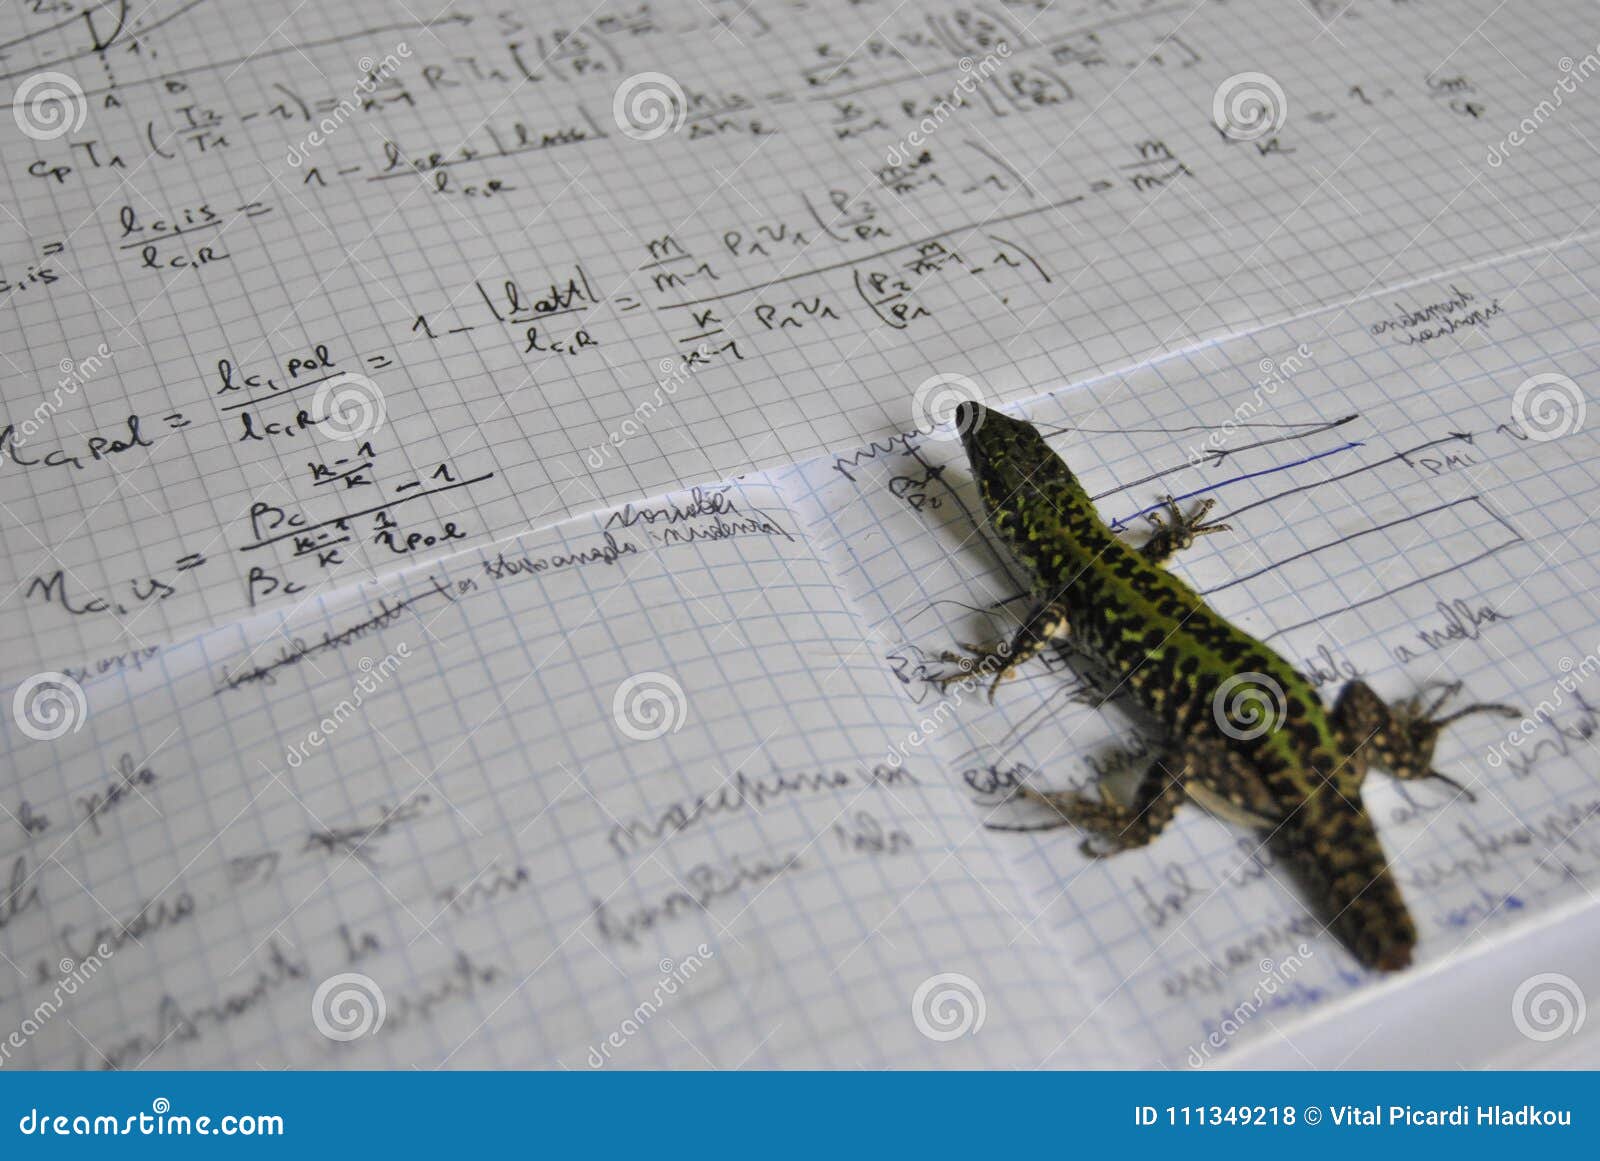 lizard studyng thermodynamics